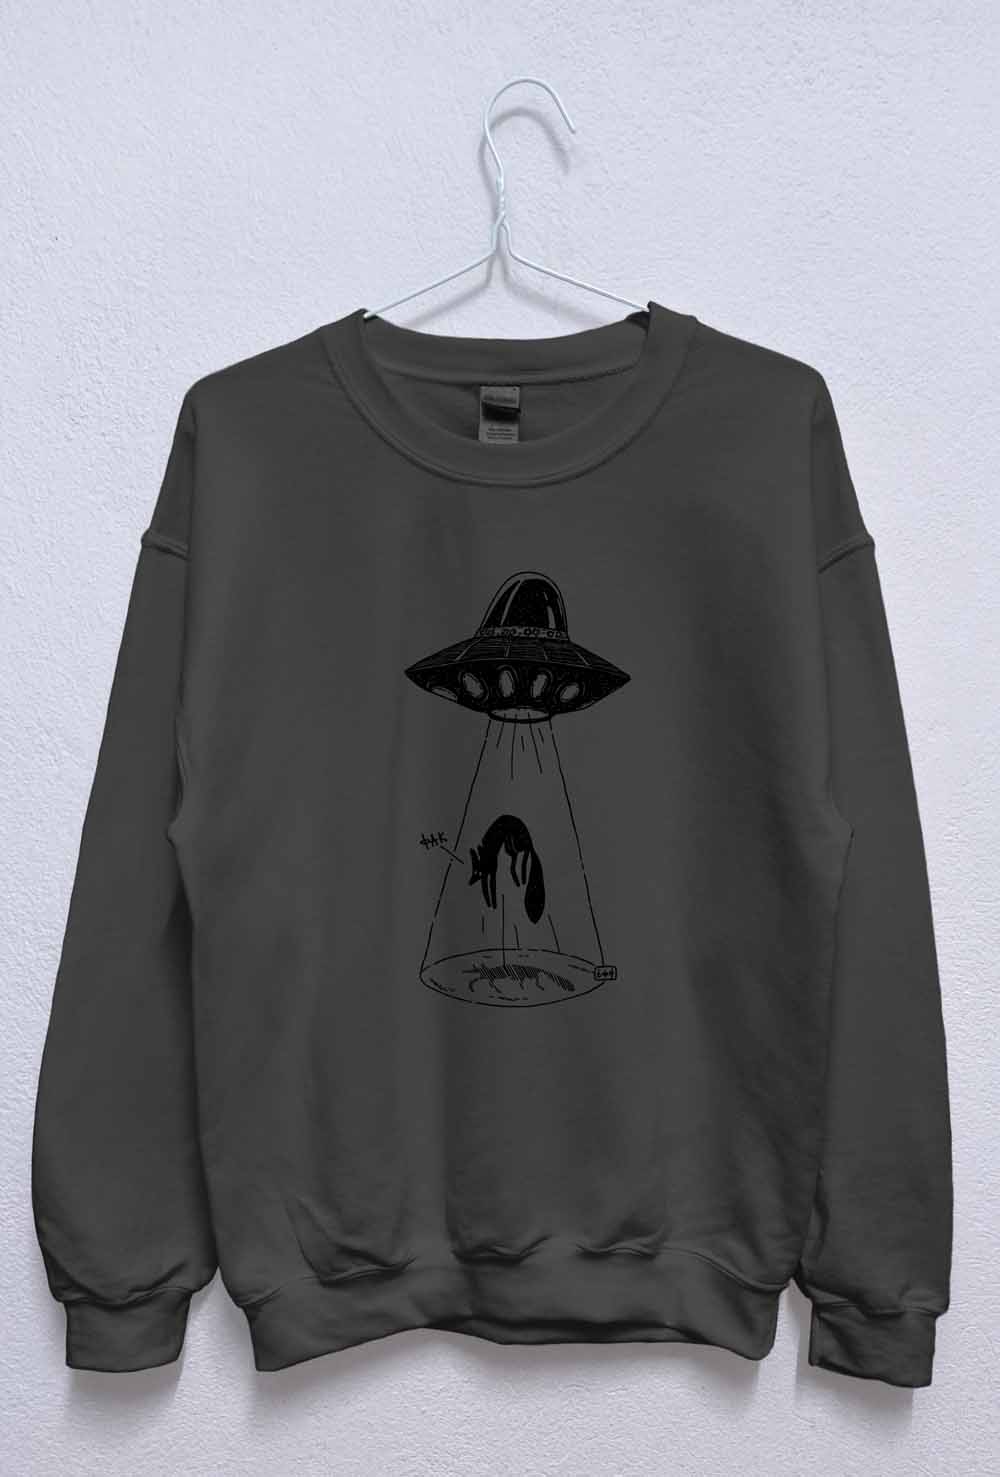 ufo carchoal sweatshirt